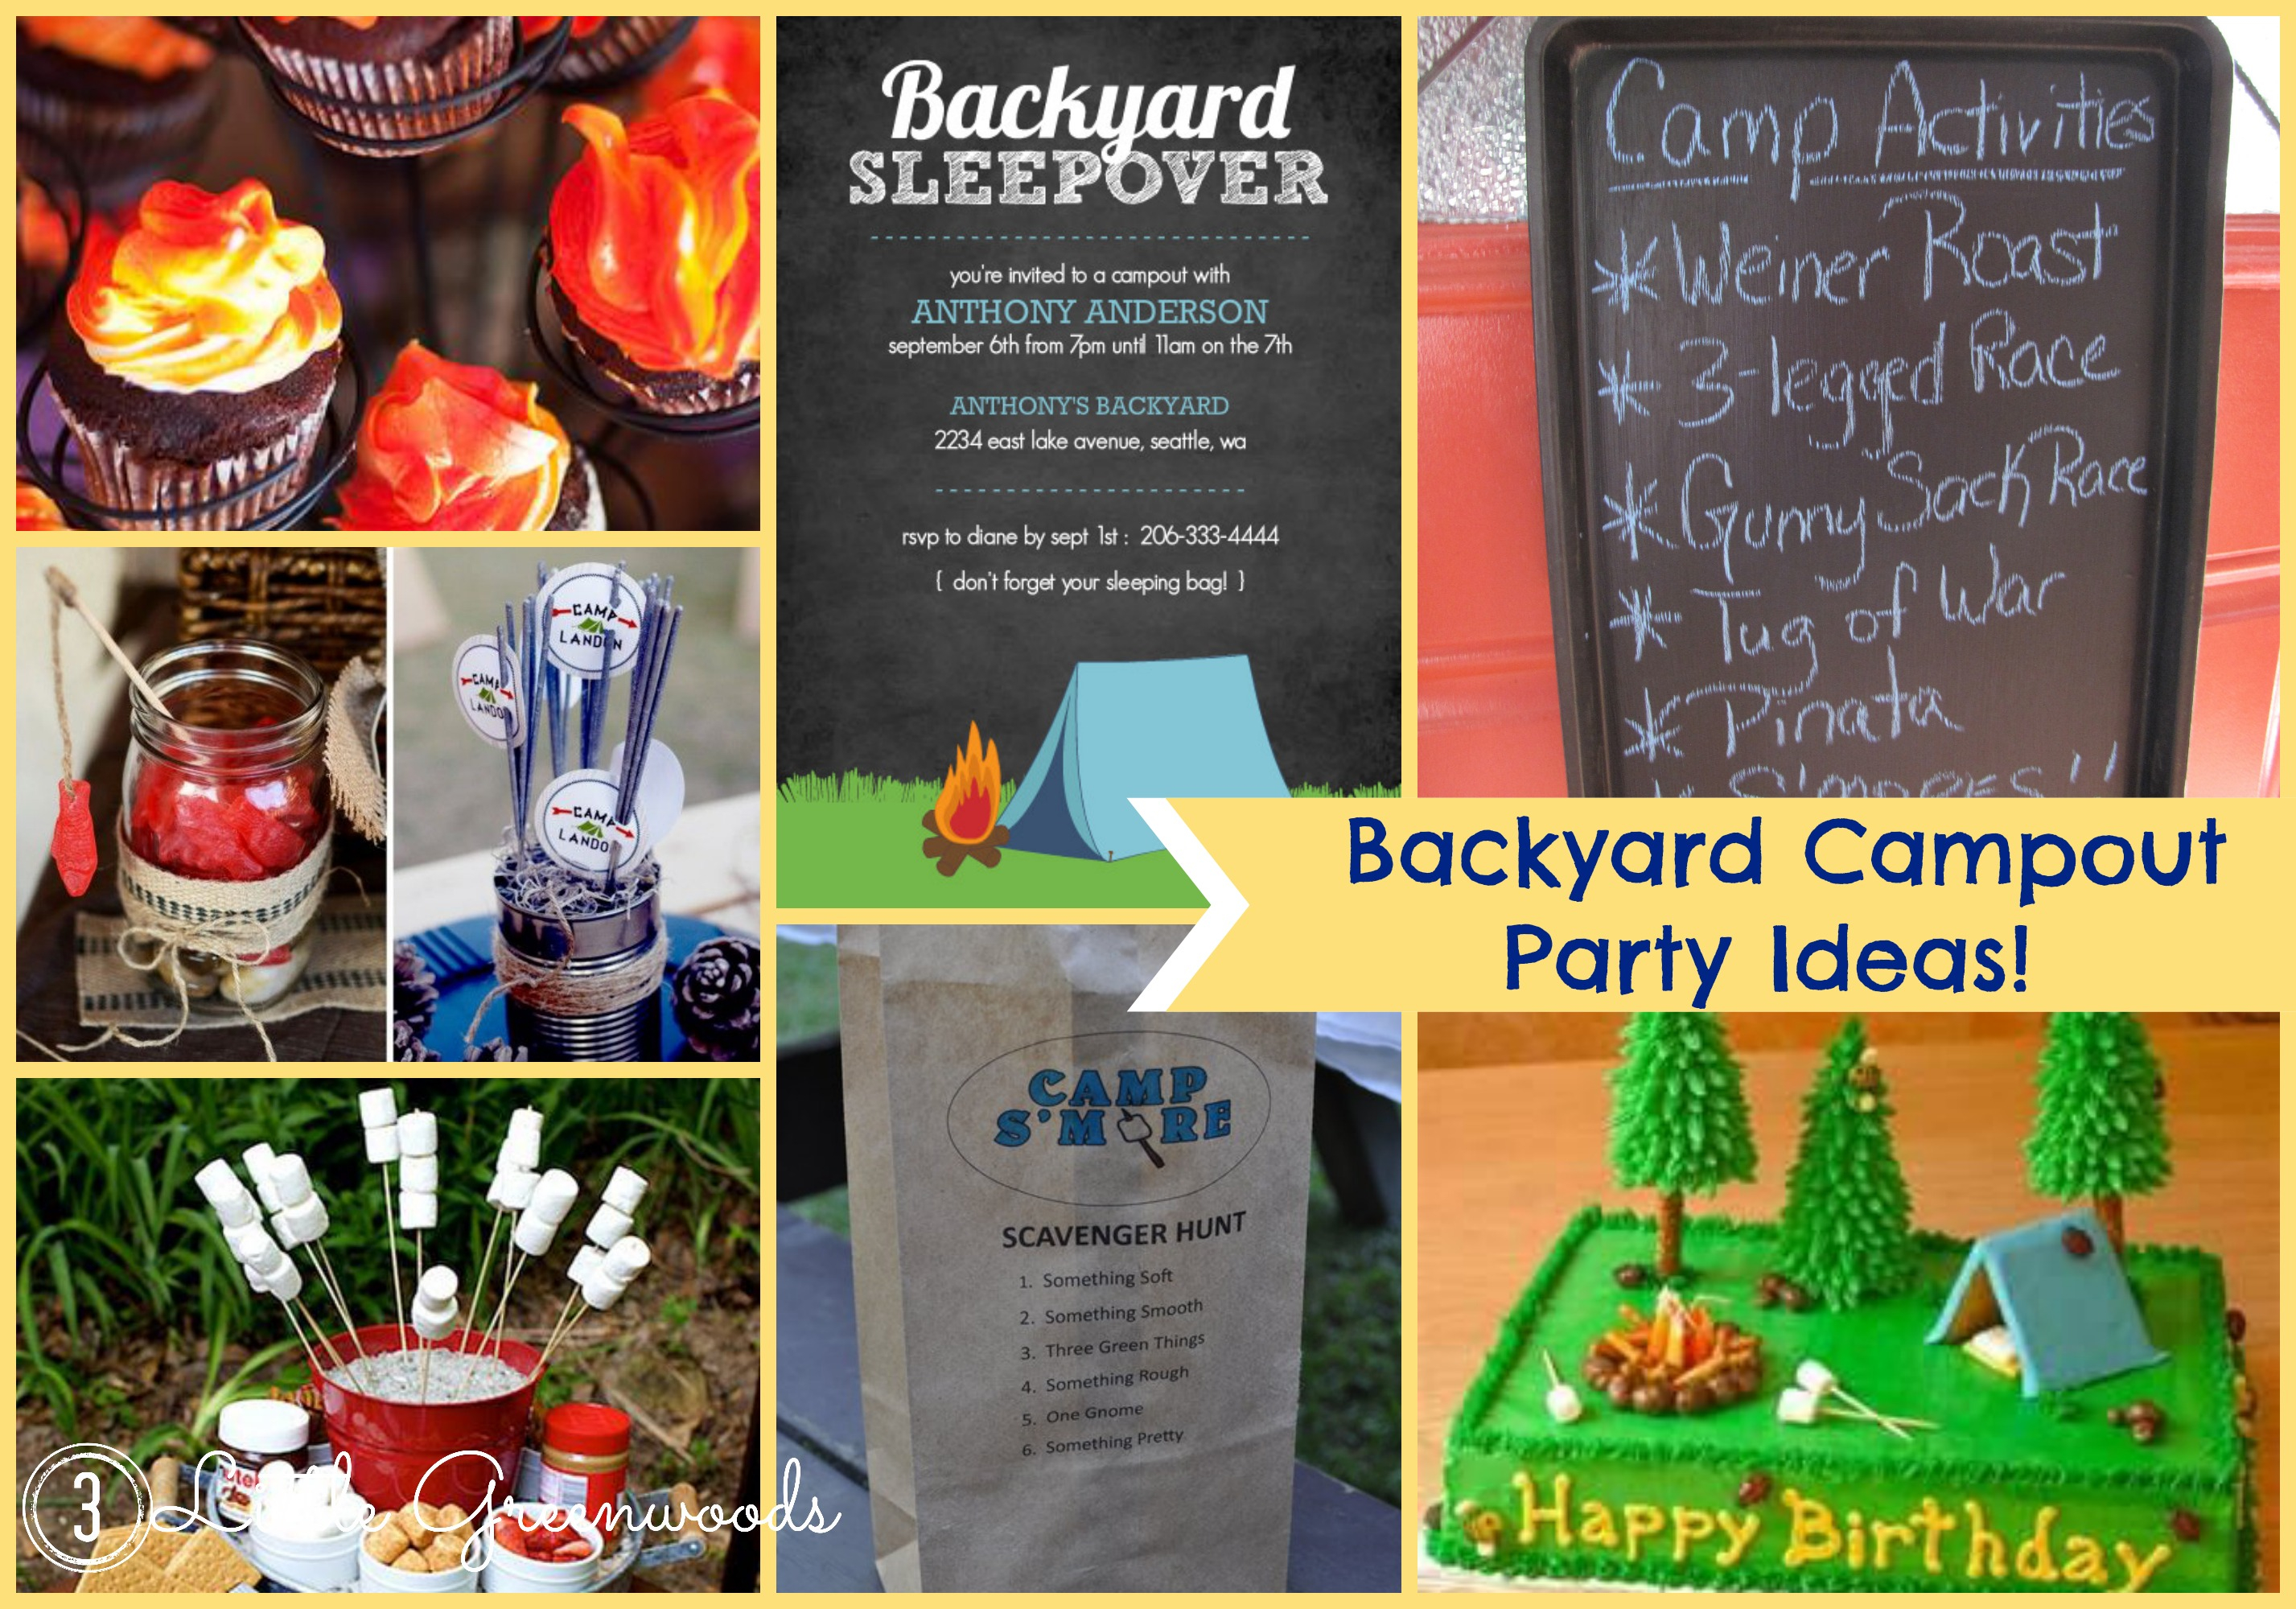 22.backyard campout party inspiration 3 little greenwoods via SIMPHOME.COM